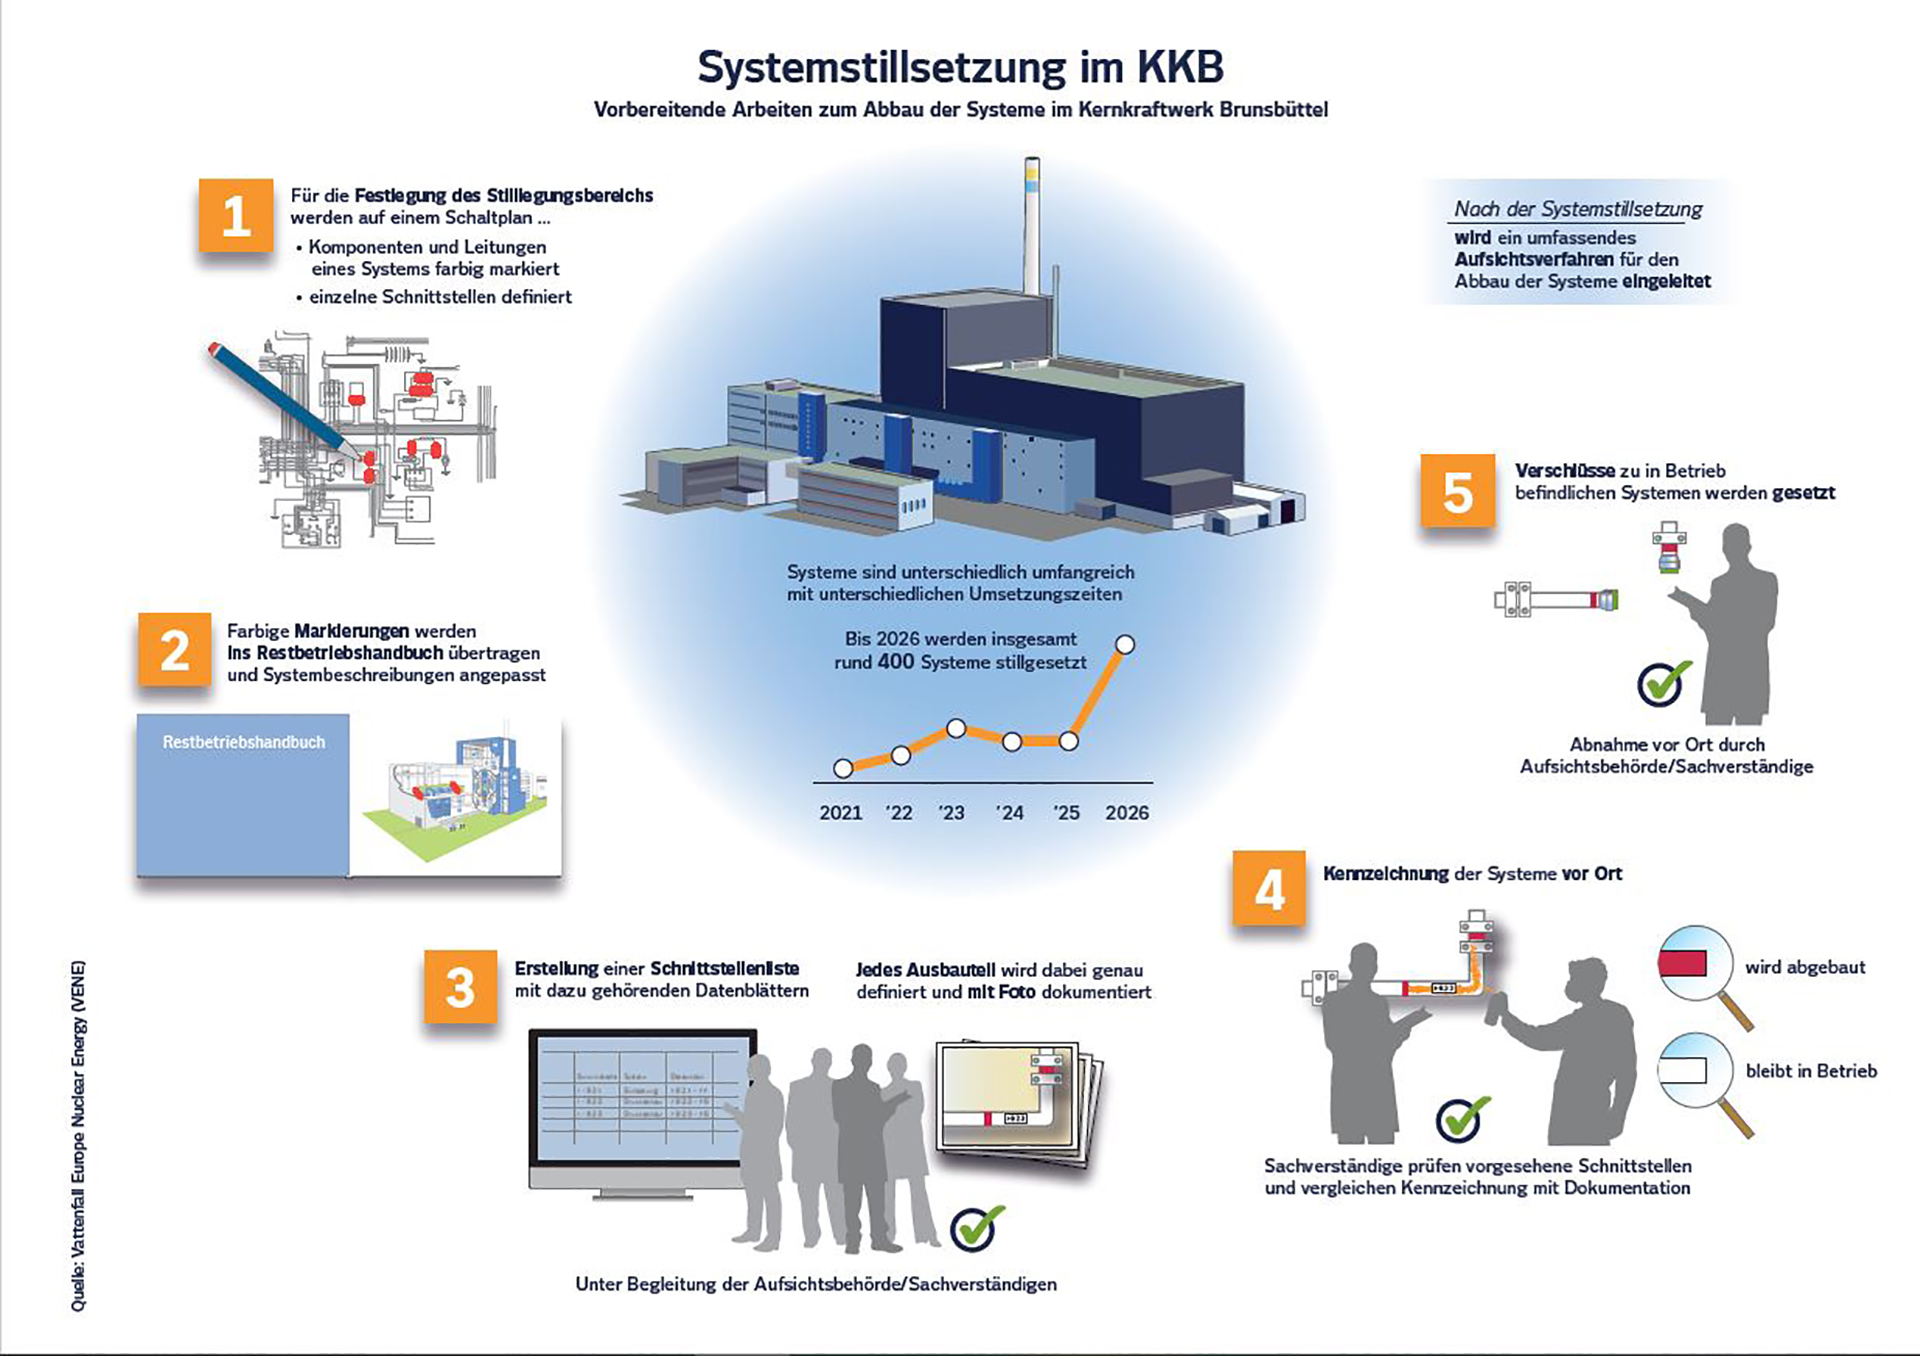 KKB_Systemstillsetzung_NR.jpg